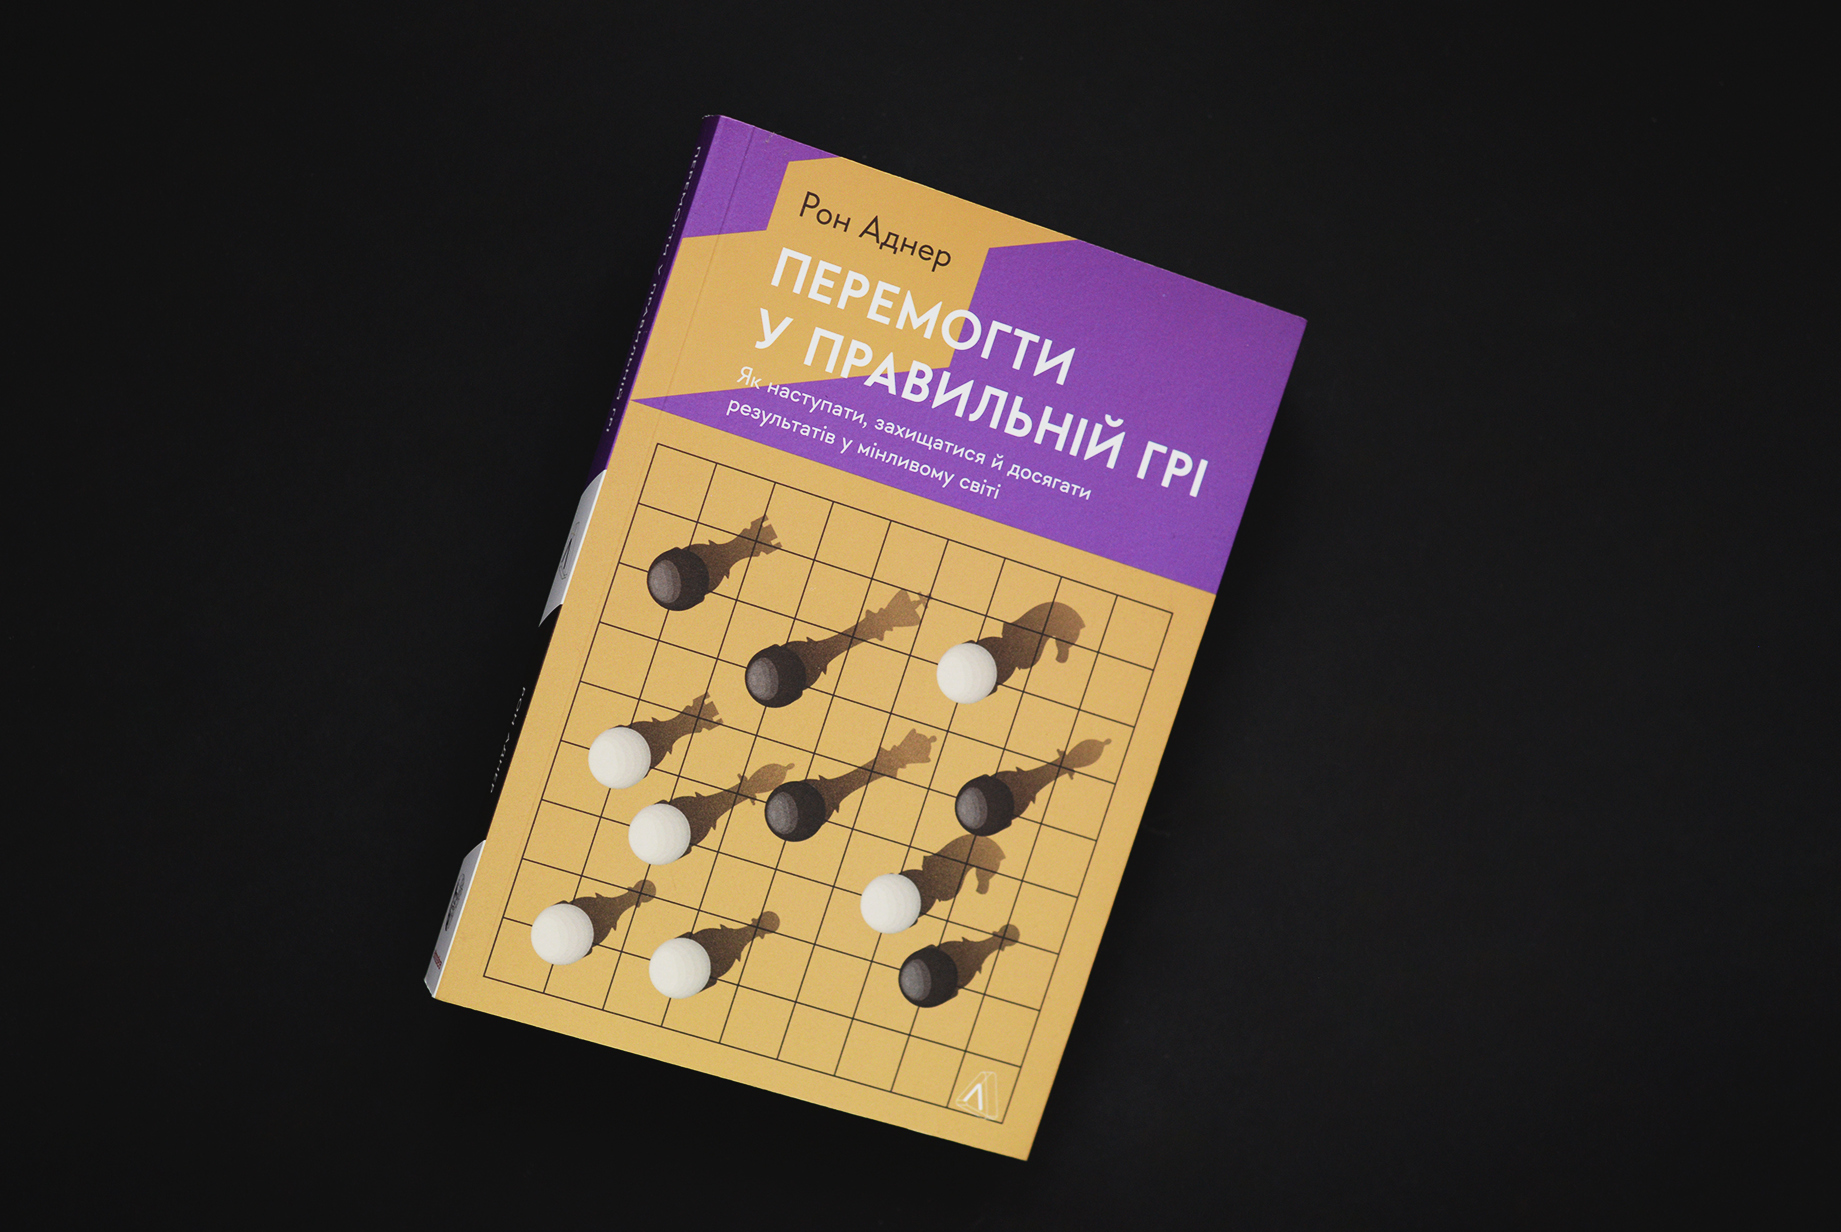 Ukraїnśke vydannja knygy «Peremogty u pravyľnij gri», jake vyjšlo u vydavnyctvi Laboratorija